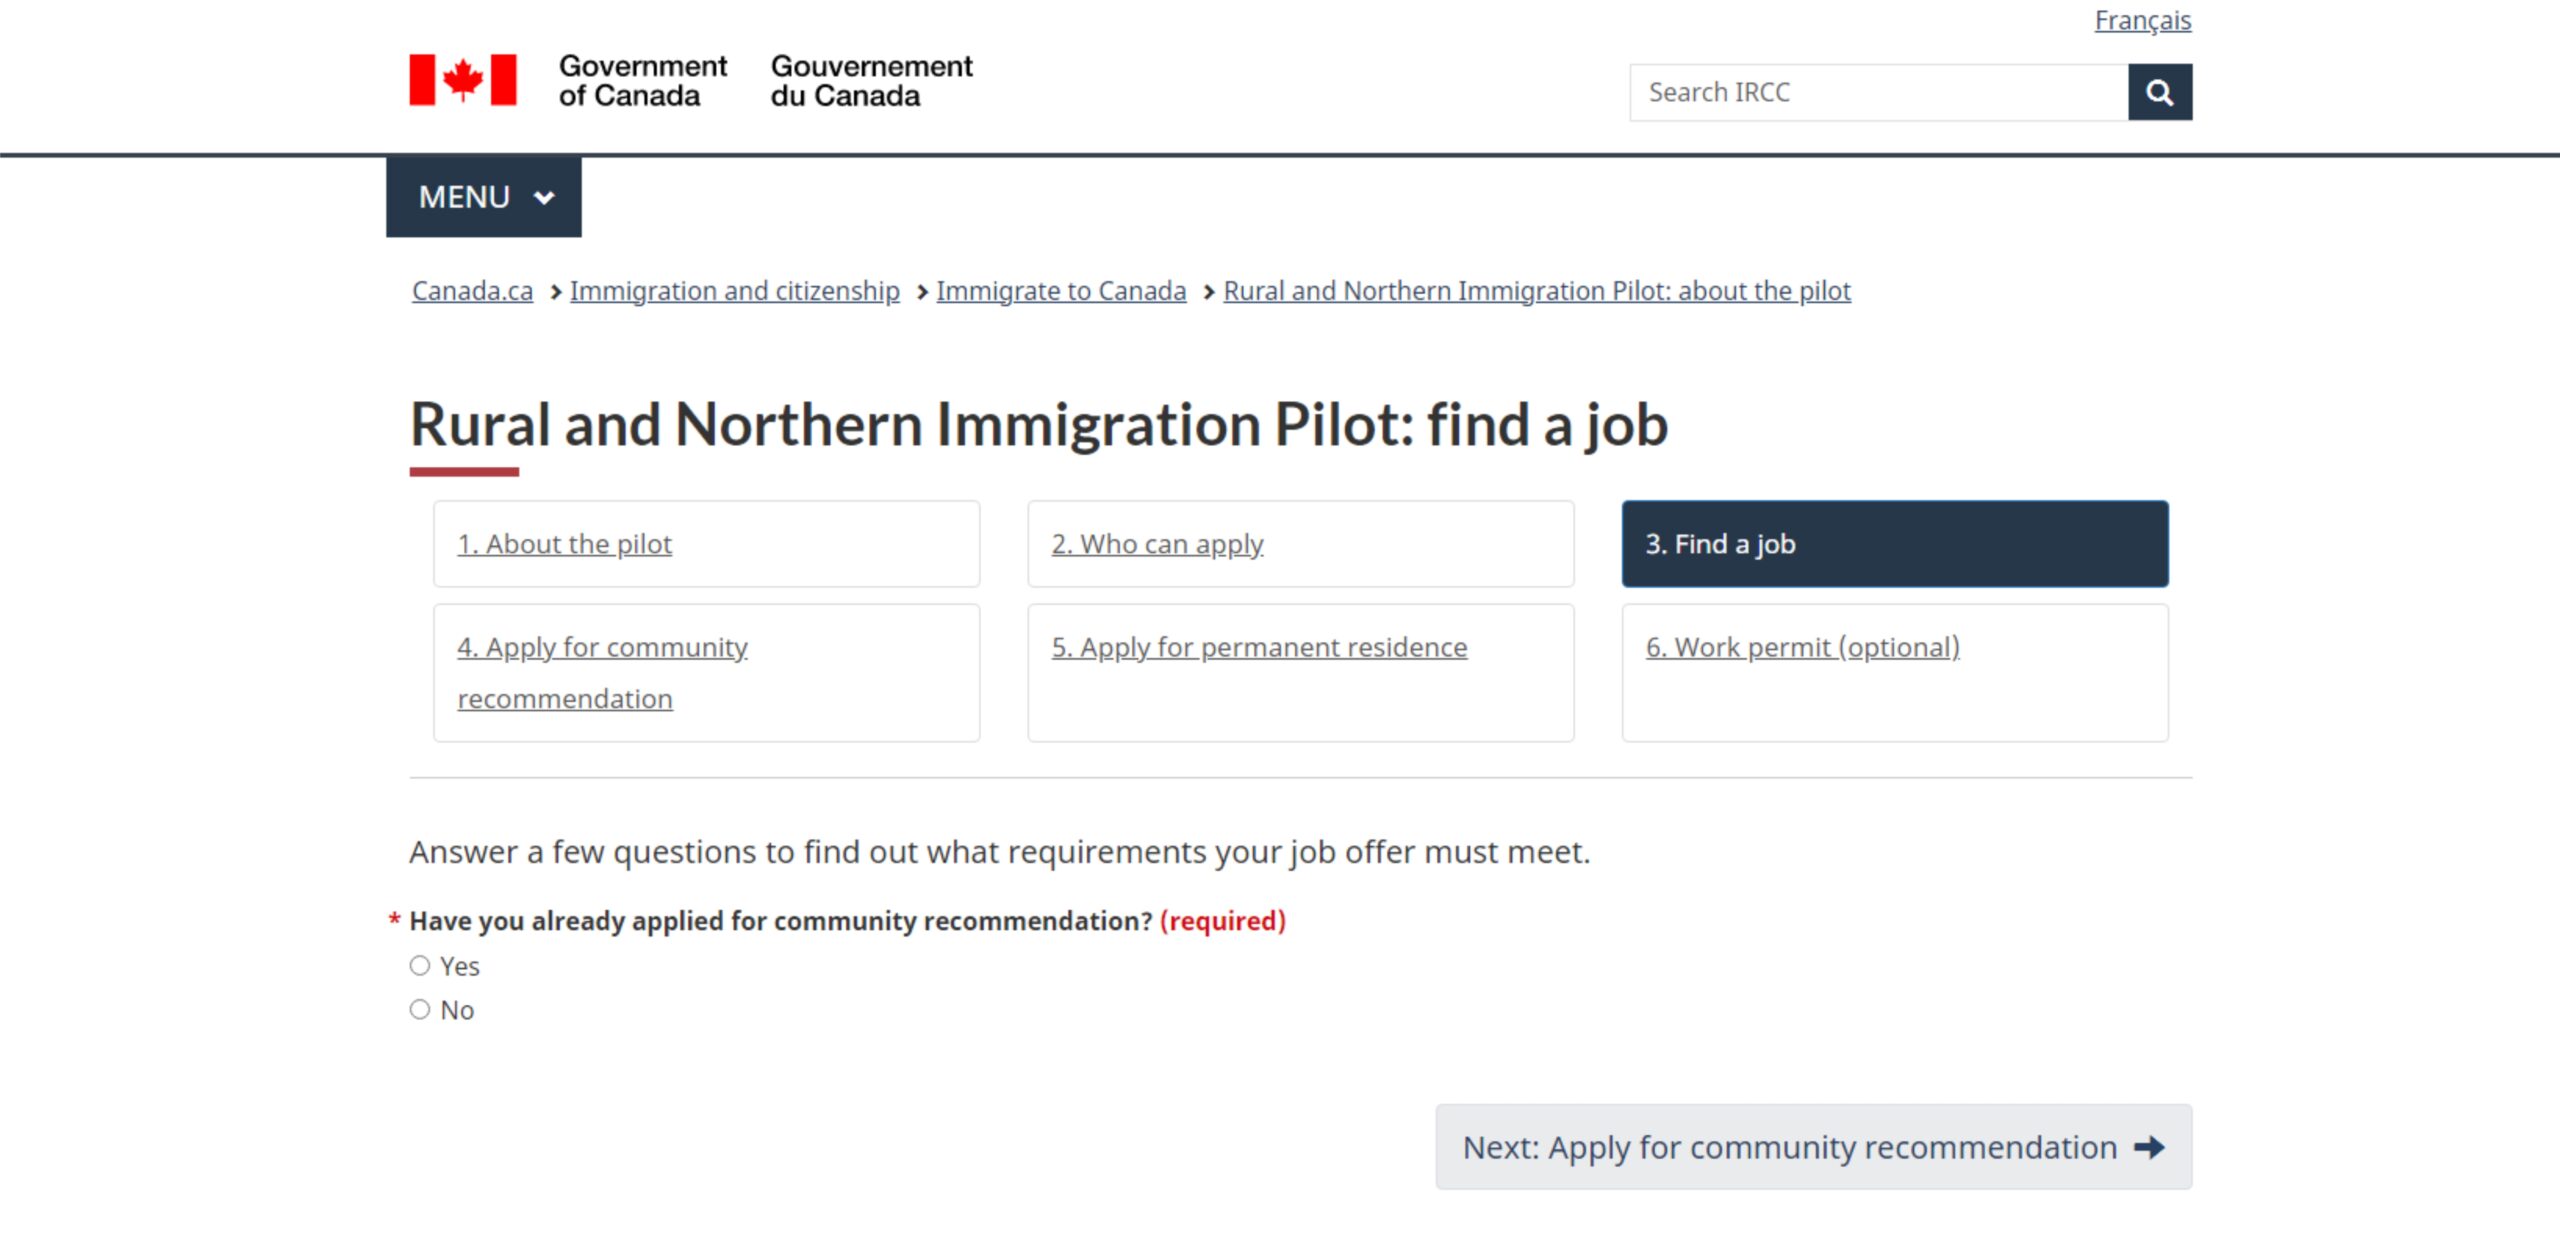 Atlantic Immigration Pilot Vs Rural and Northern Immigration Pilot: Rural and Northern Immigration Pilot